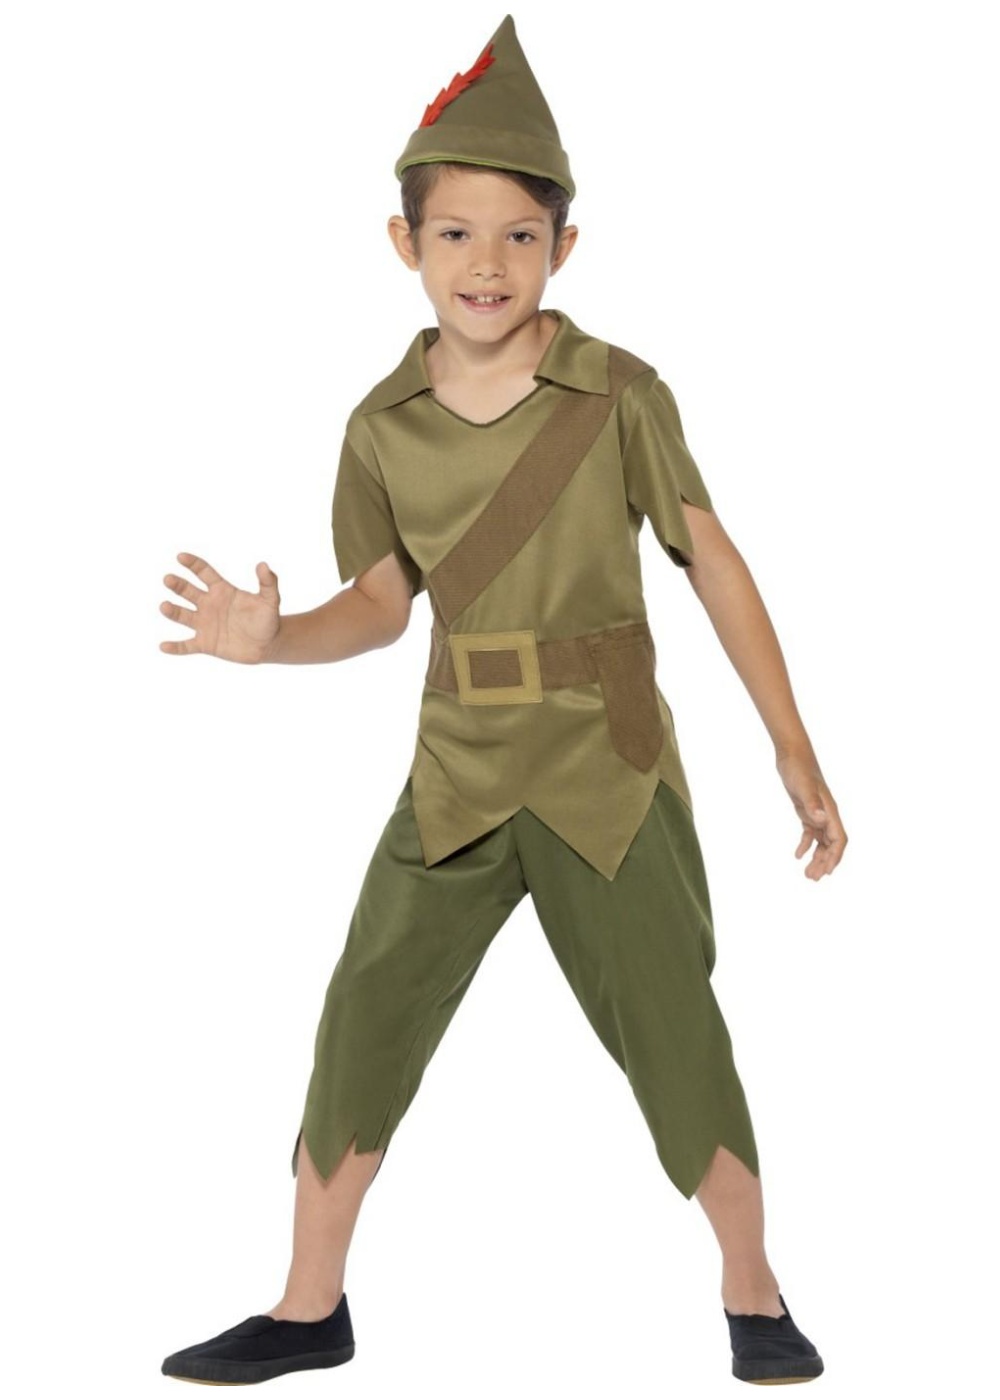  Boys Peter Pan Costume